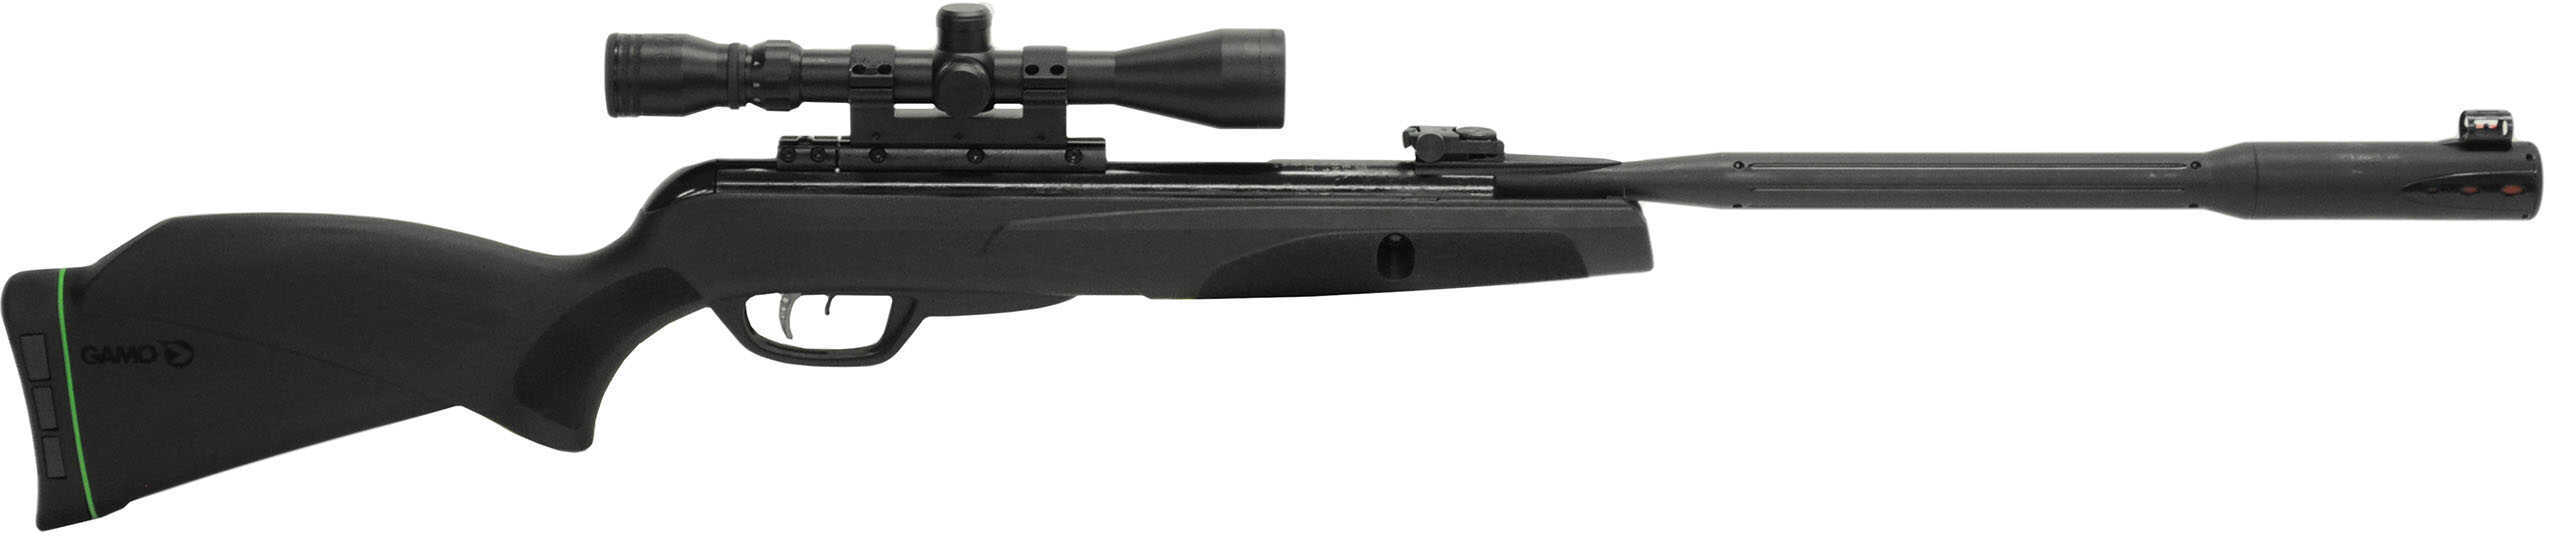 Gamo Whisper Fusion Mach 1 Airgun Rifle 22 Caliber With 3-9x40 Scope 1100 Fps